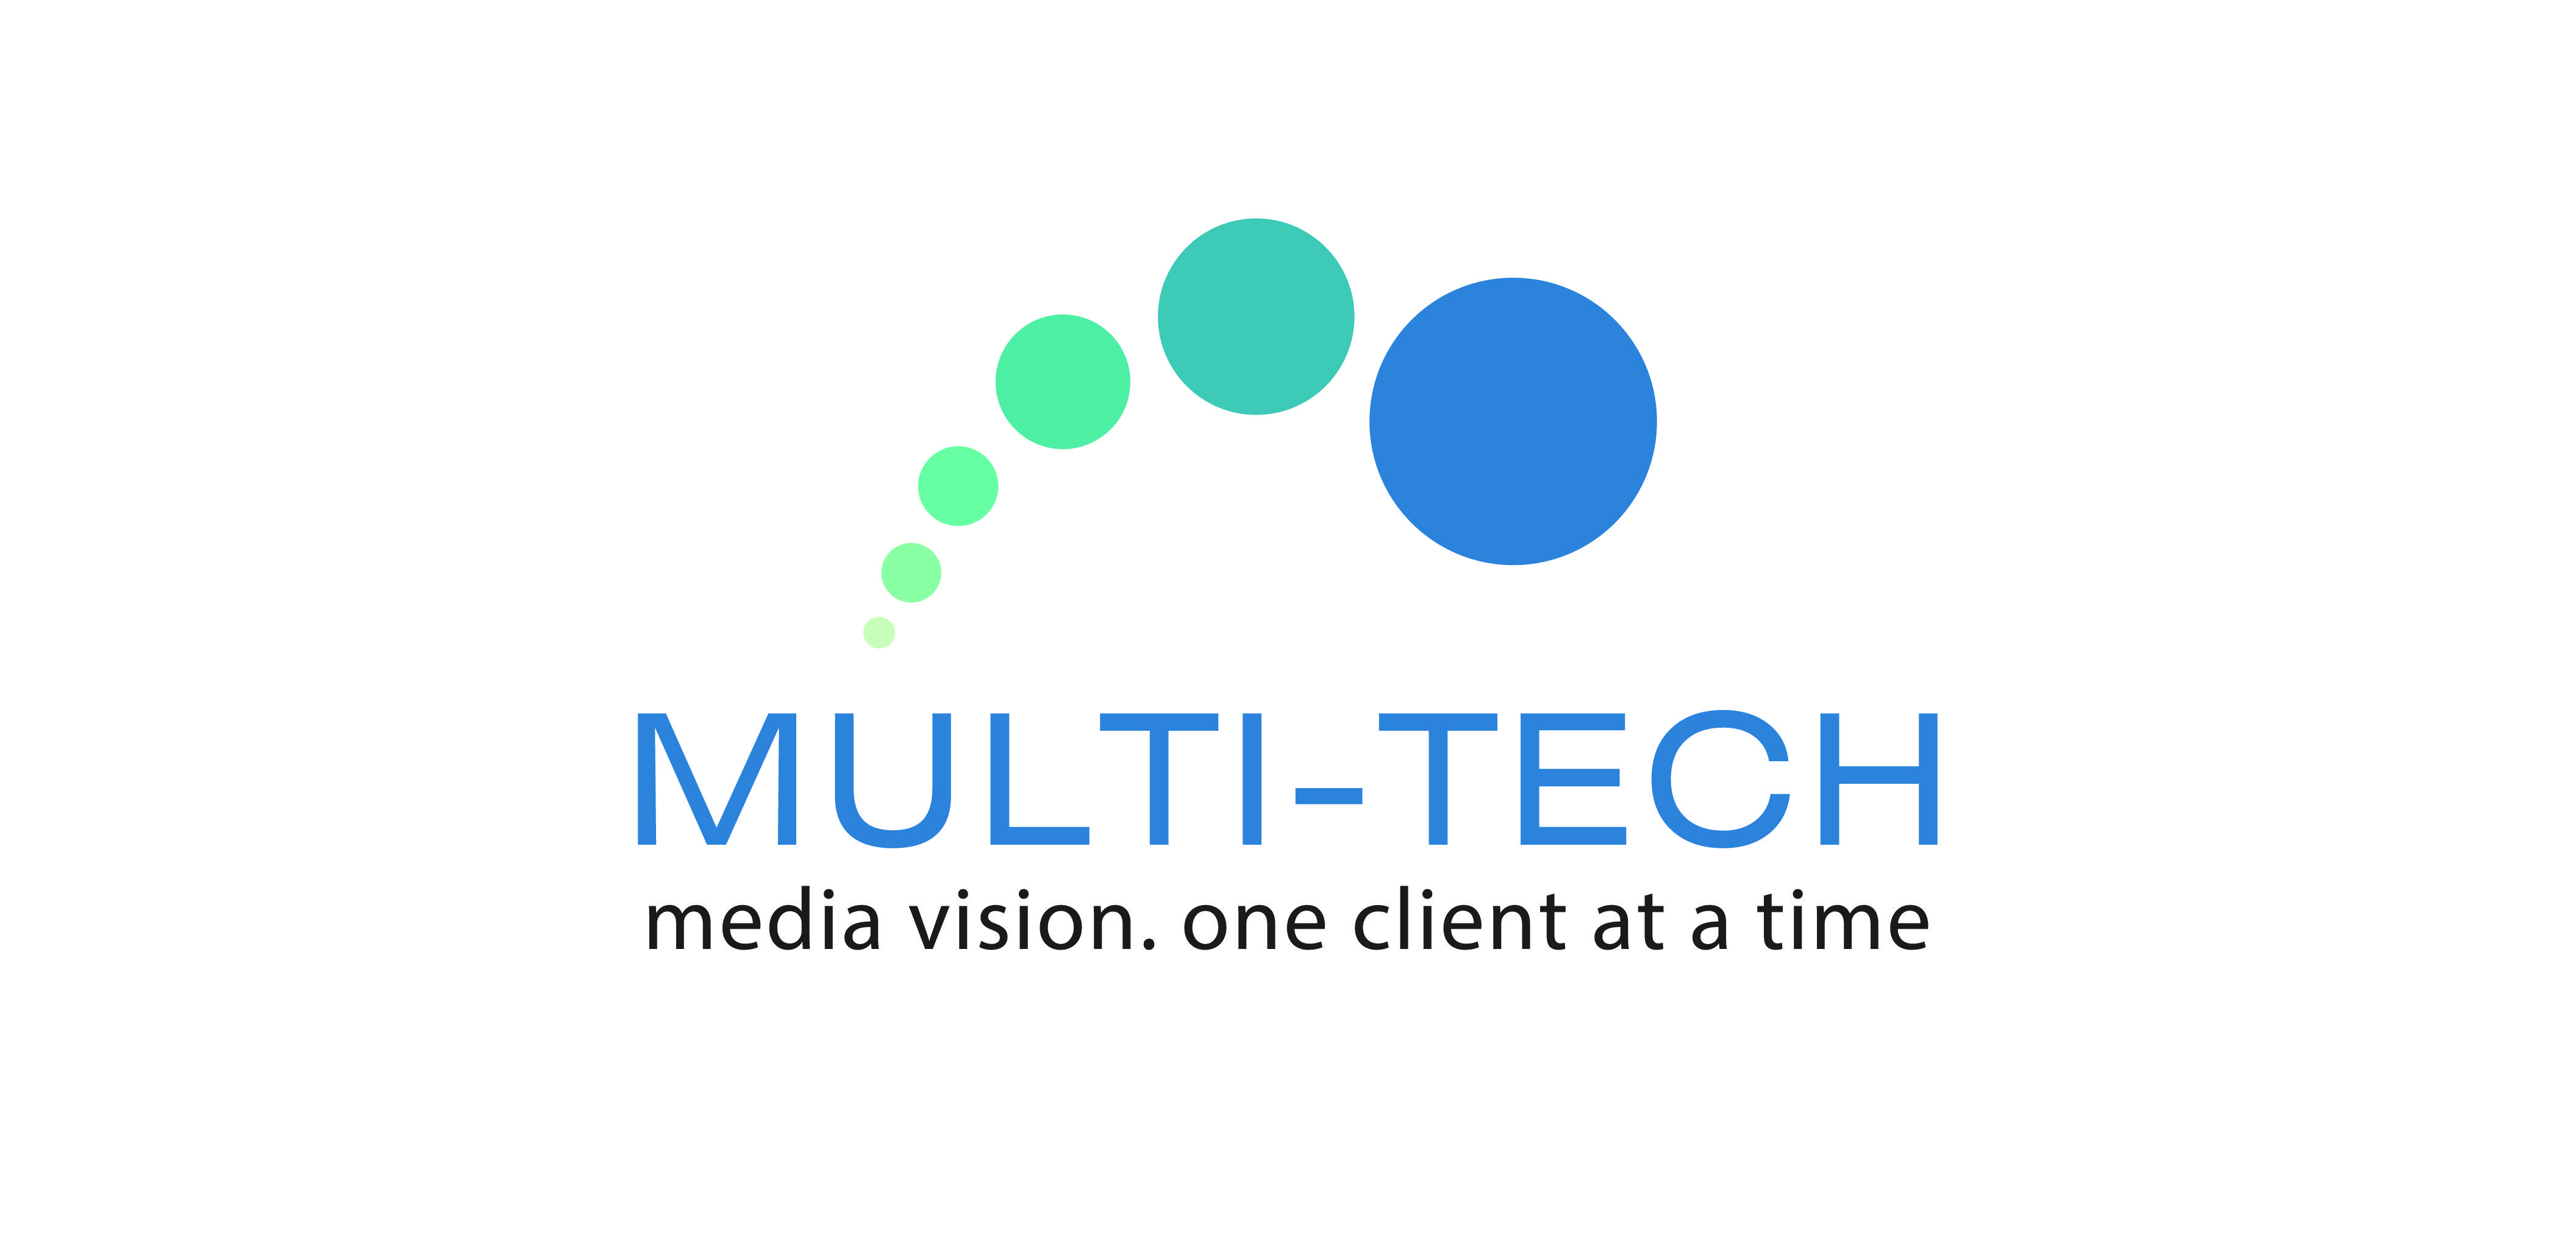 Multitech Logo - Multi Tech Attends CES 2015!. Multi Tech Interactive Marketing